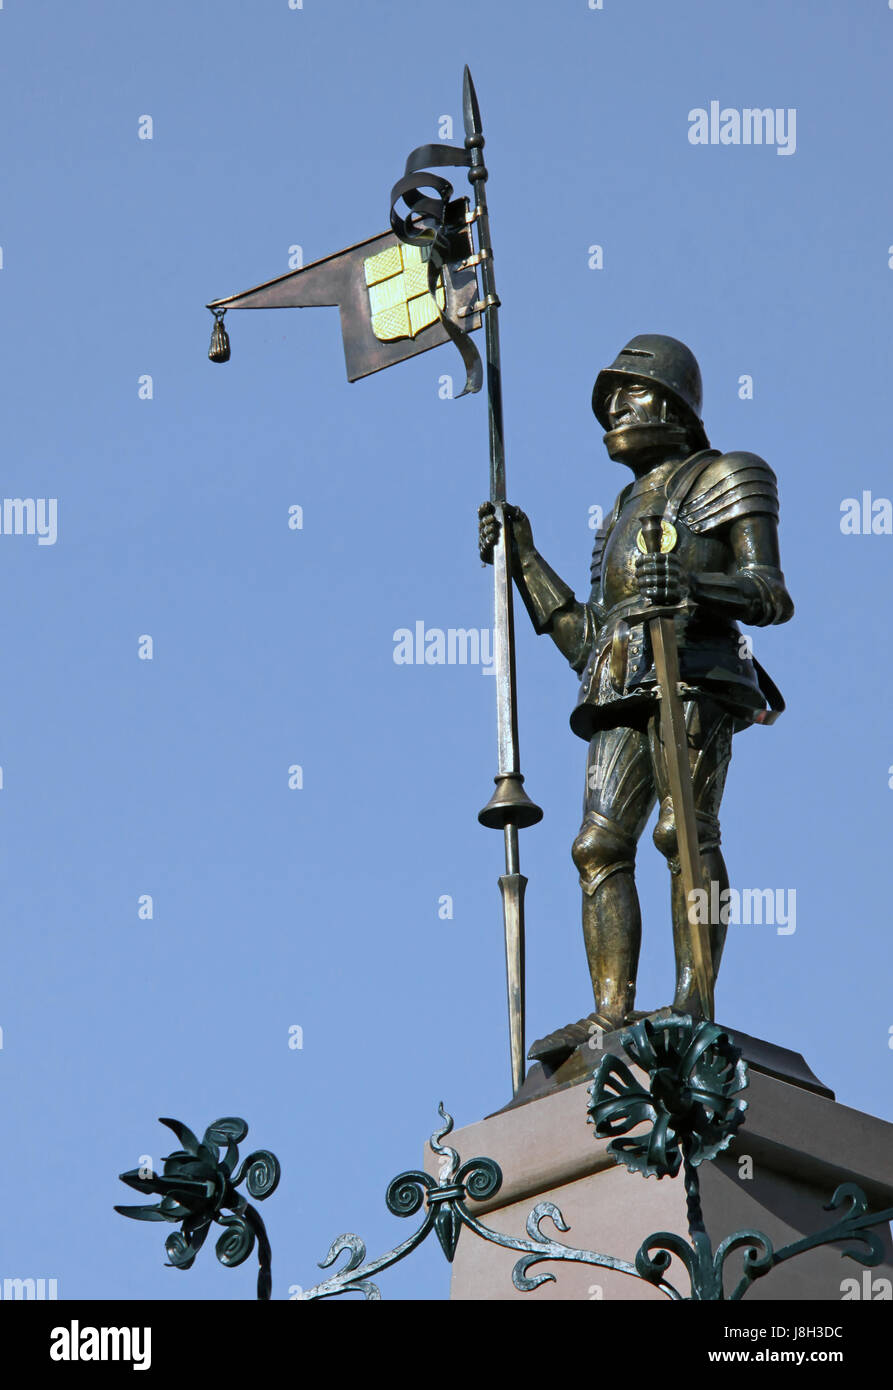 knight, jugendstil, armament, sculpture, flag, knight, sword, arm, weapon, Stock Photo